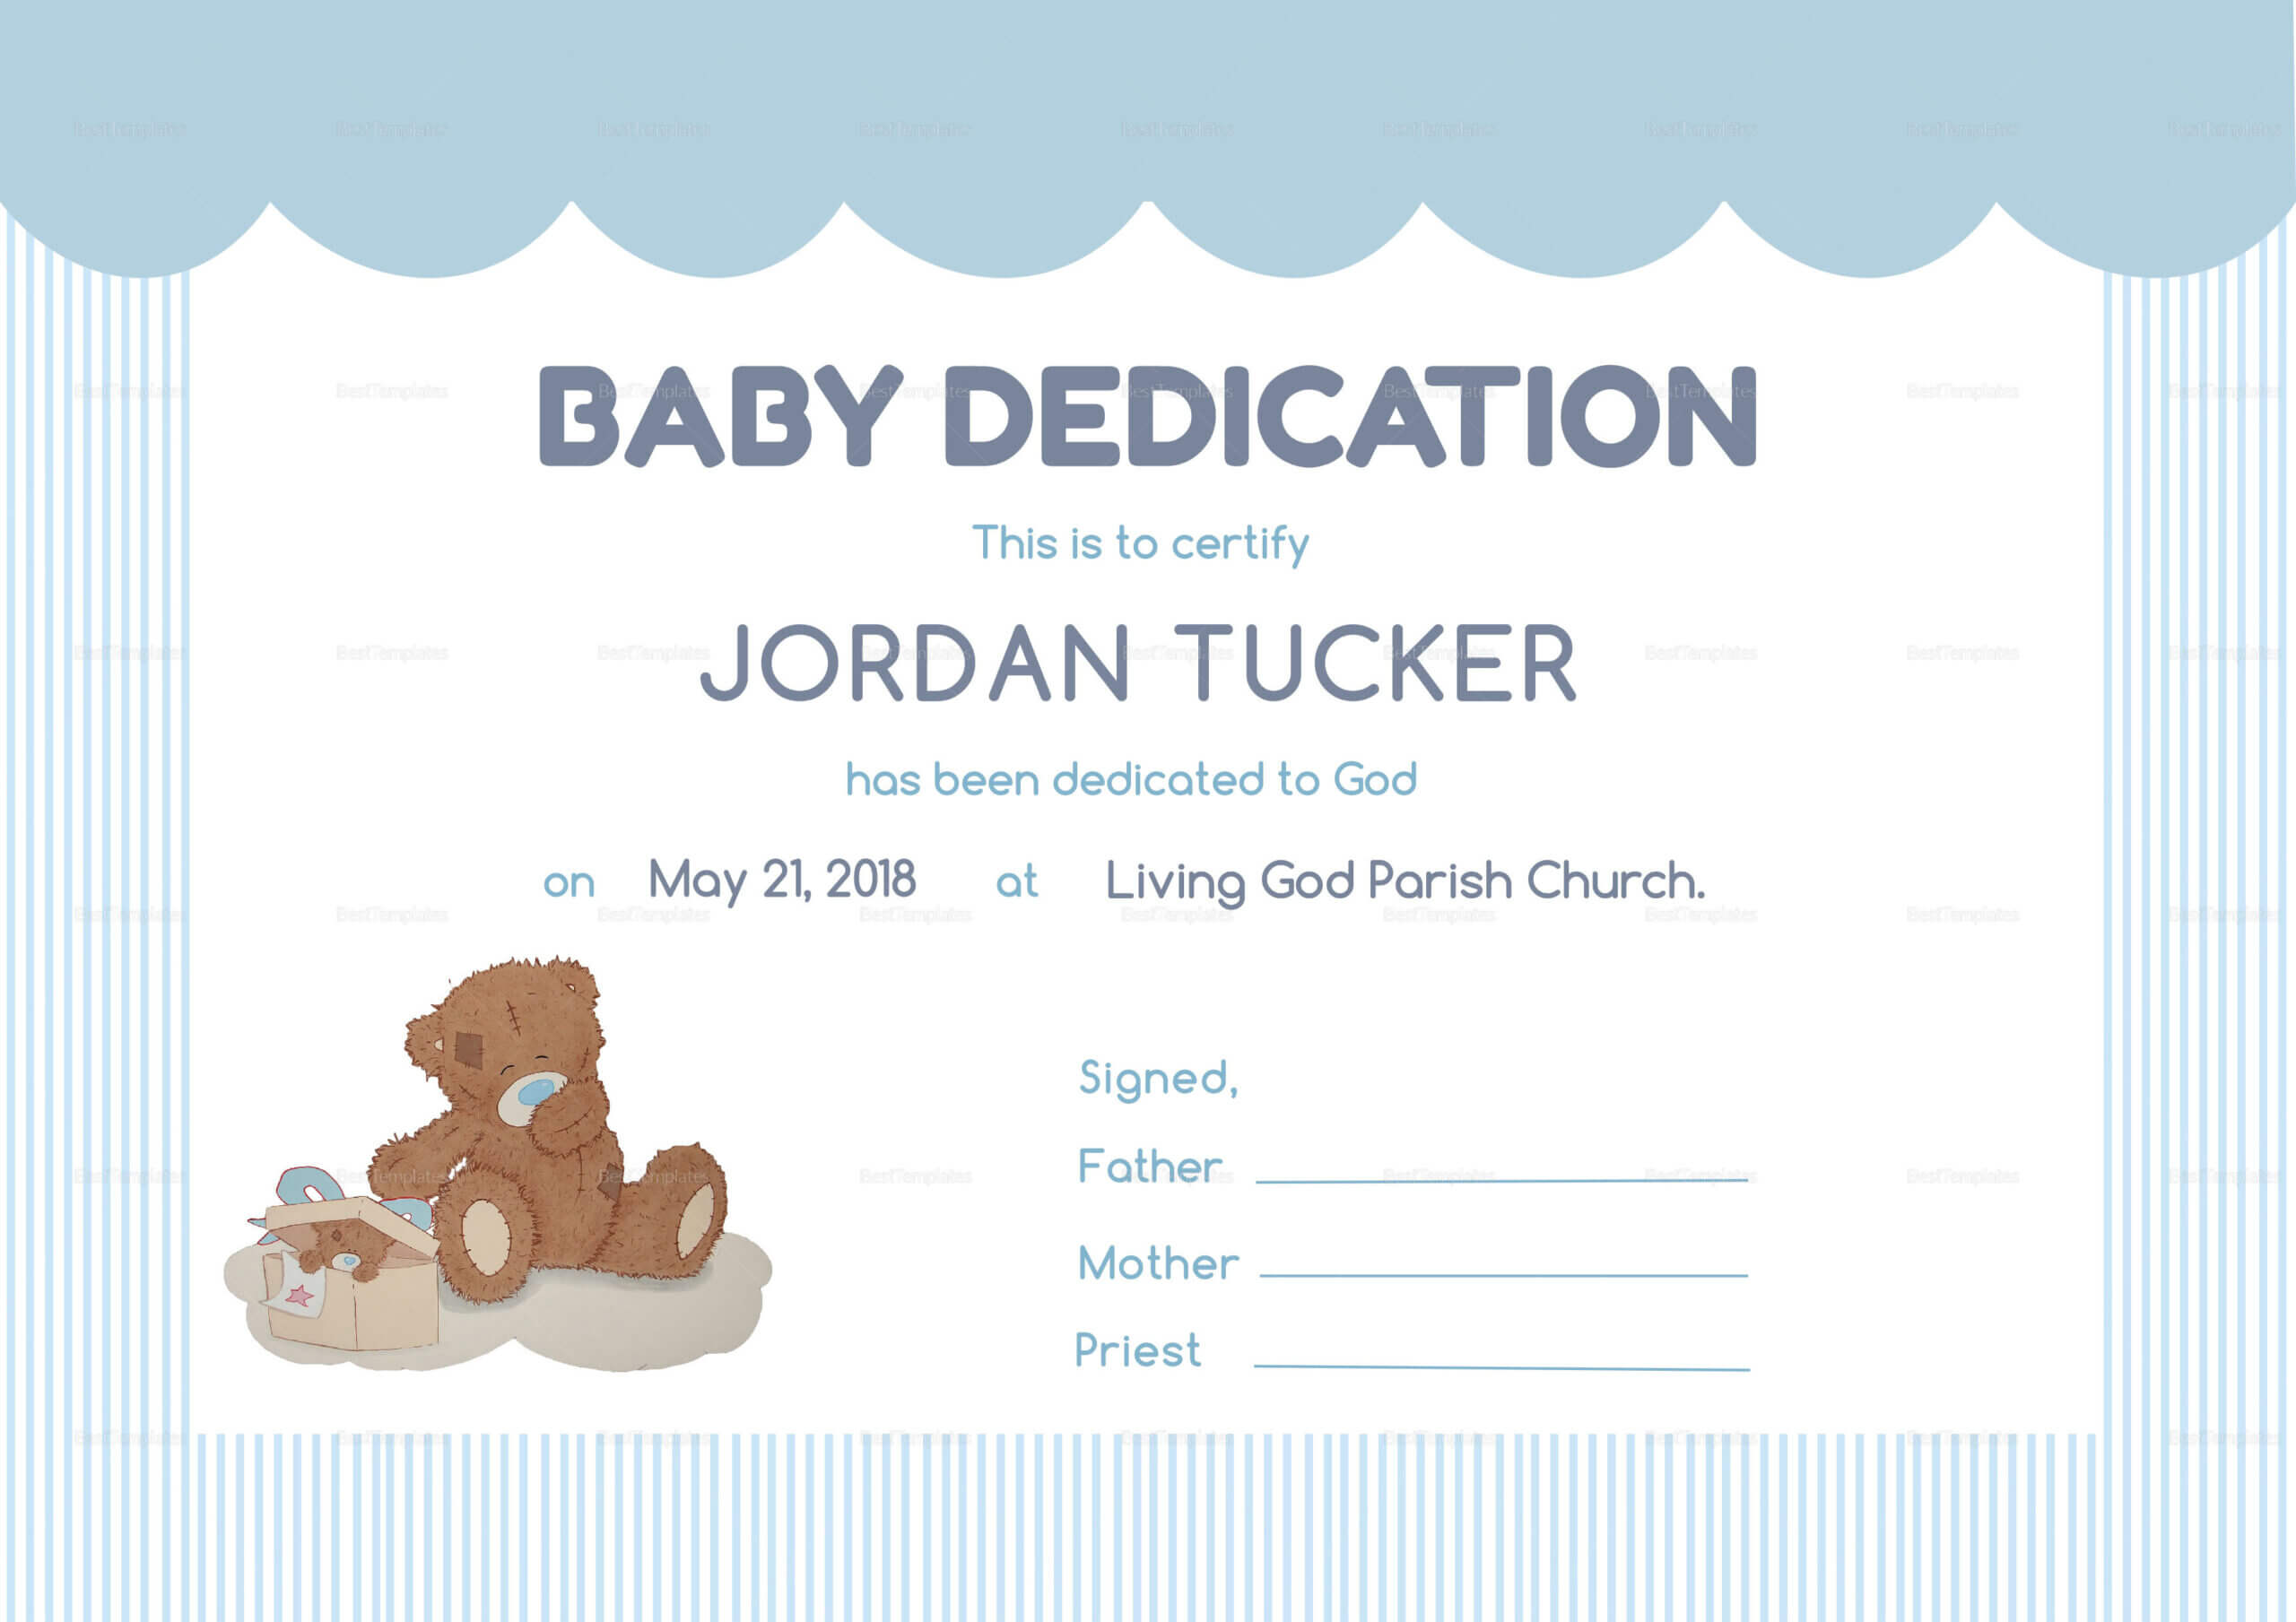 Certificate Of Dedication - Calep.midnightpig.co Regarding Baby Dedication Certificate Template